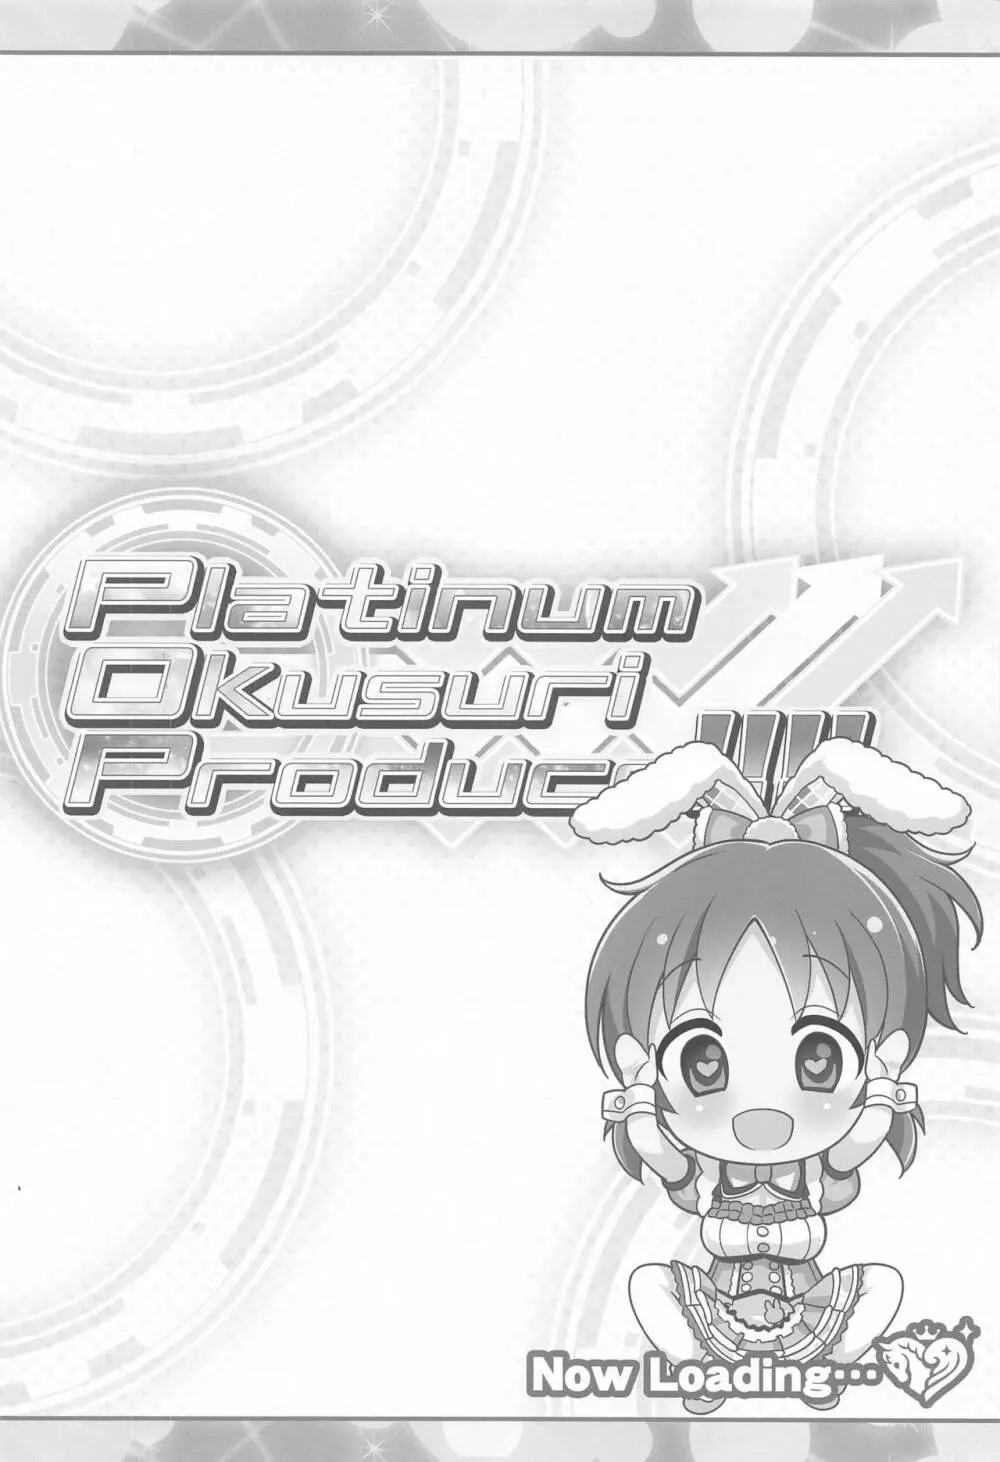 Platinum Okusuri Produce!!!! - page3